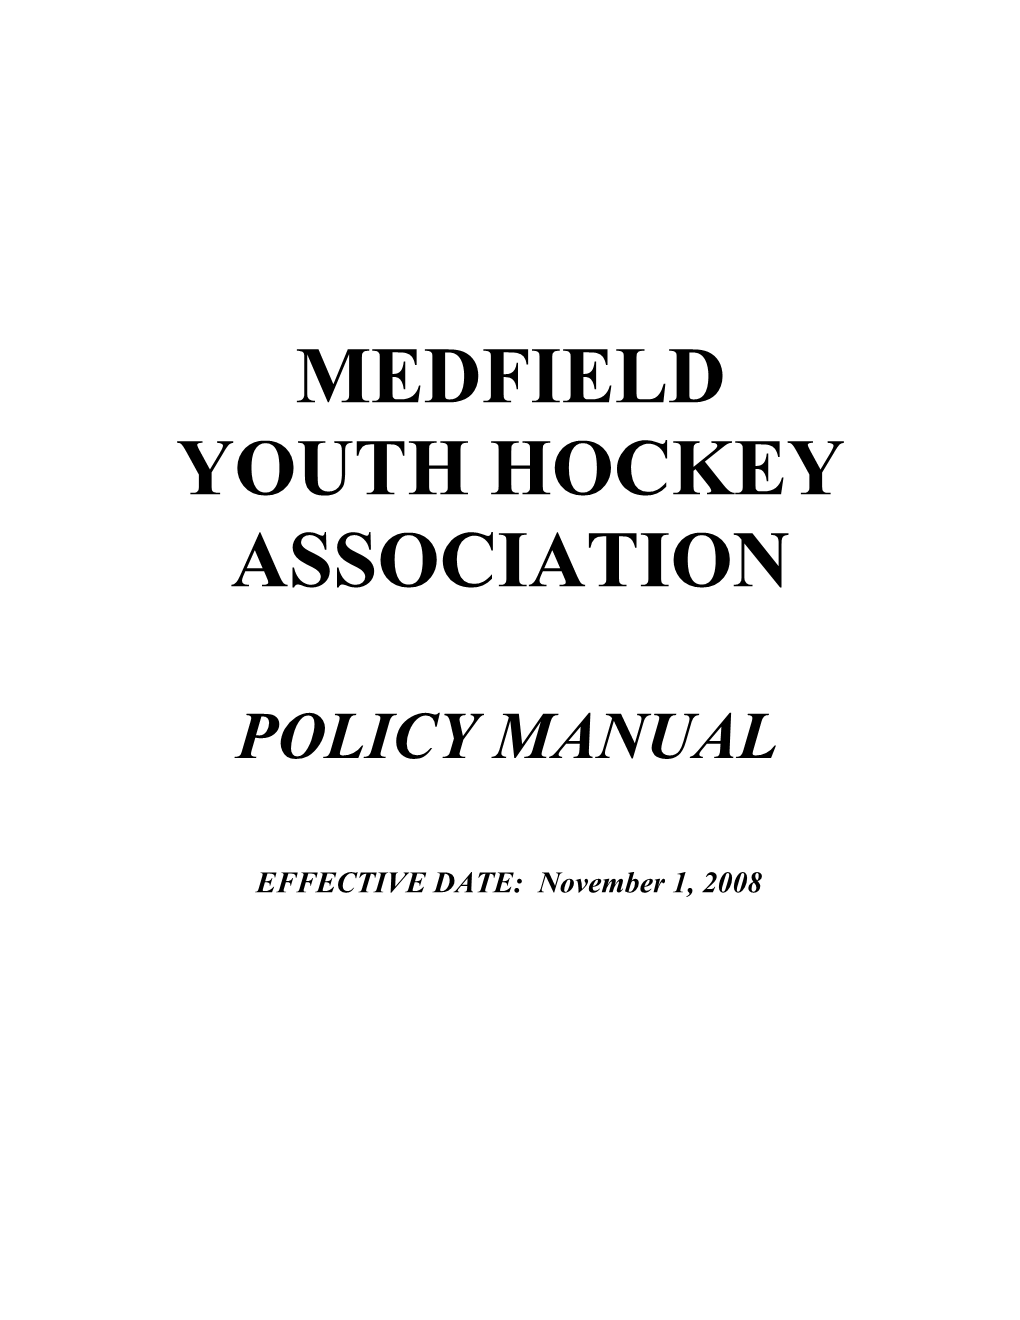 Medfield Youth Hockey Association